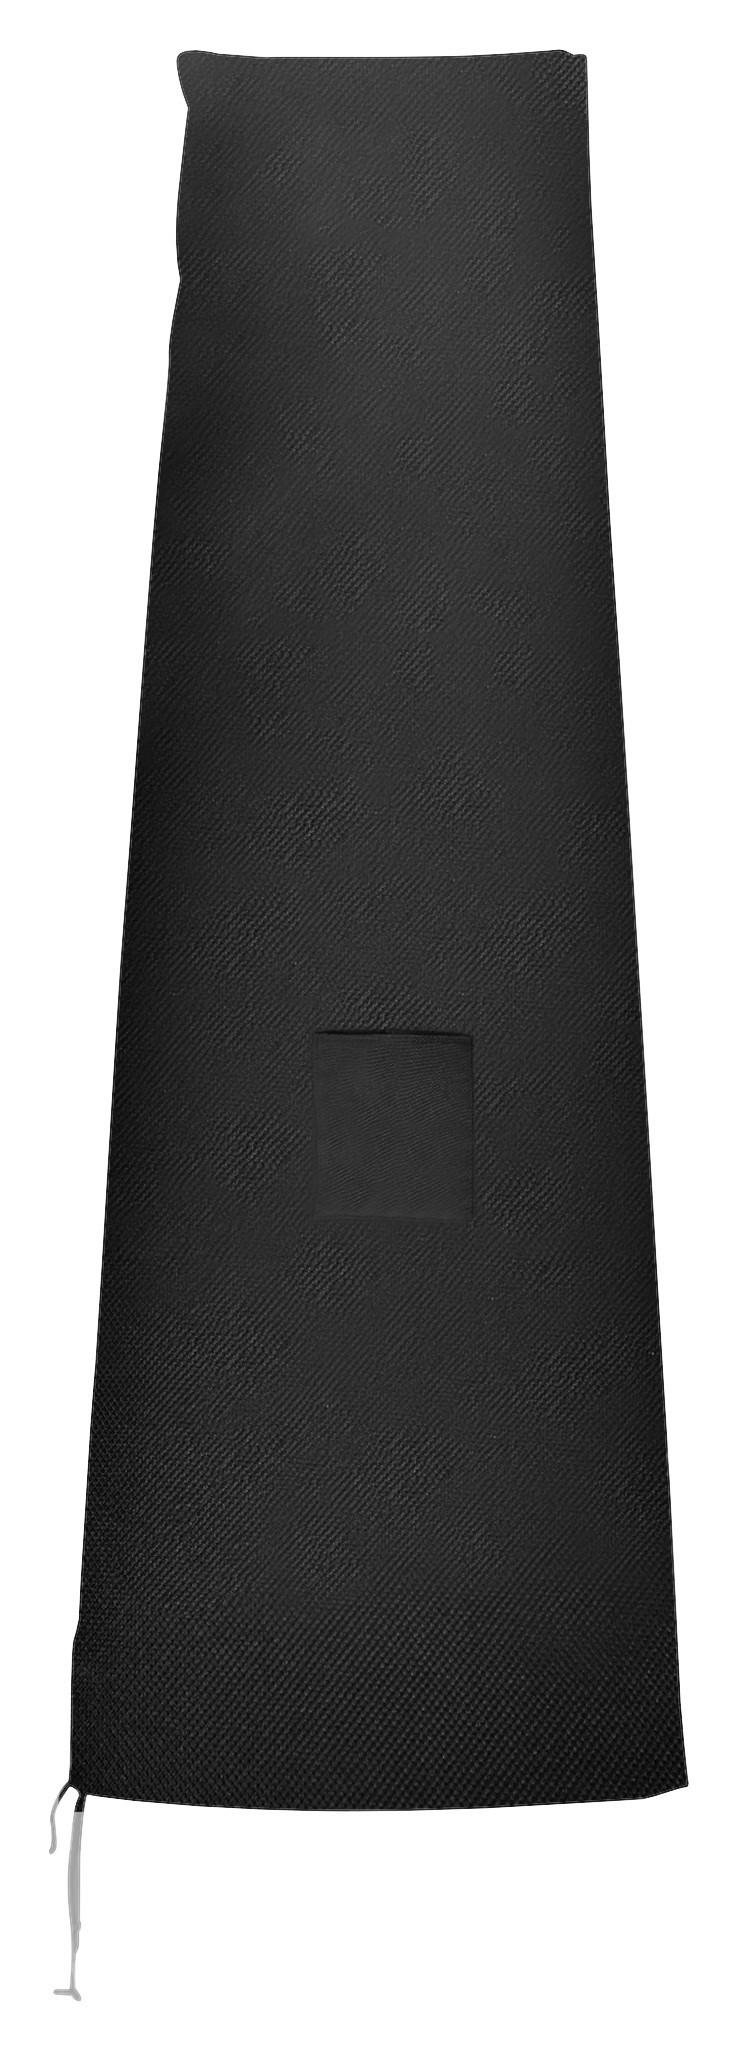 Outsunny Schutzhülle für Sonnenschirm schwarz Fiberglas B/H/L: ca. 80x0,1x200 cm